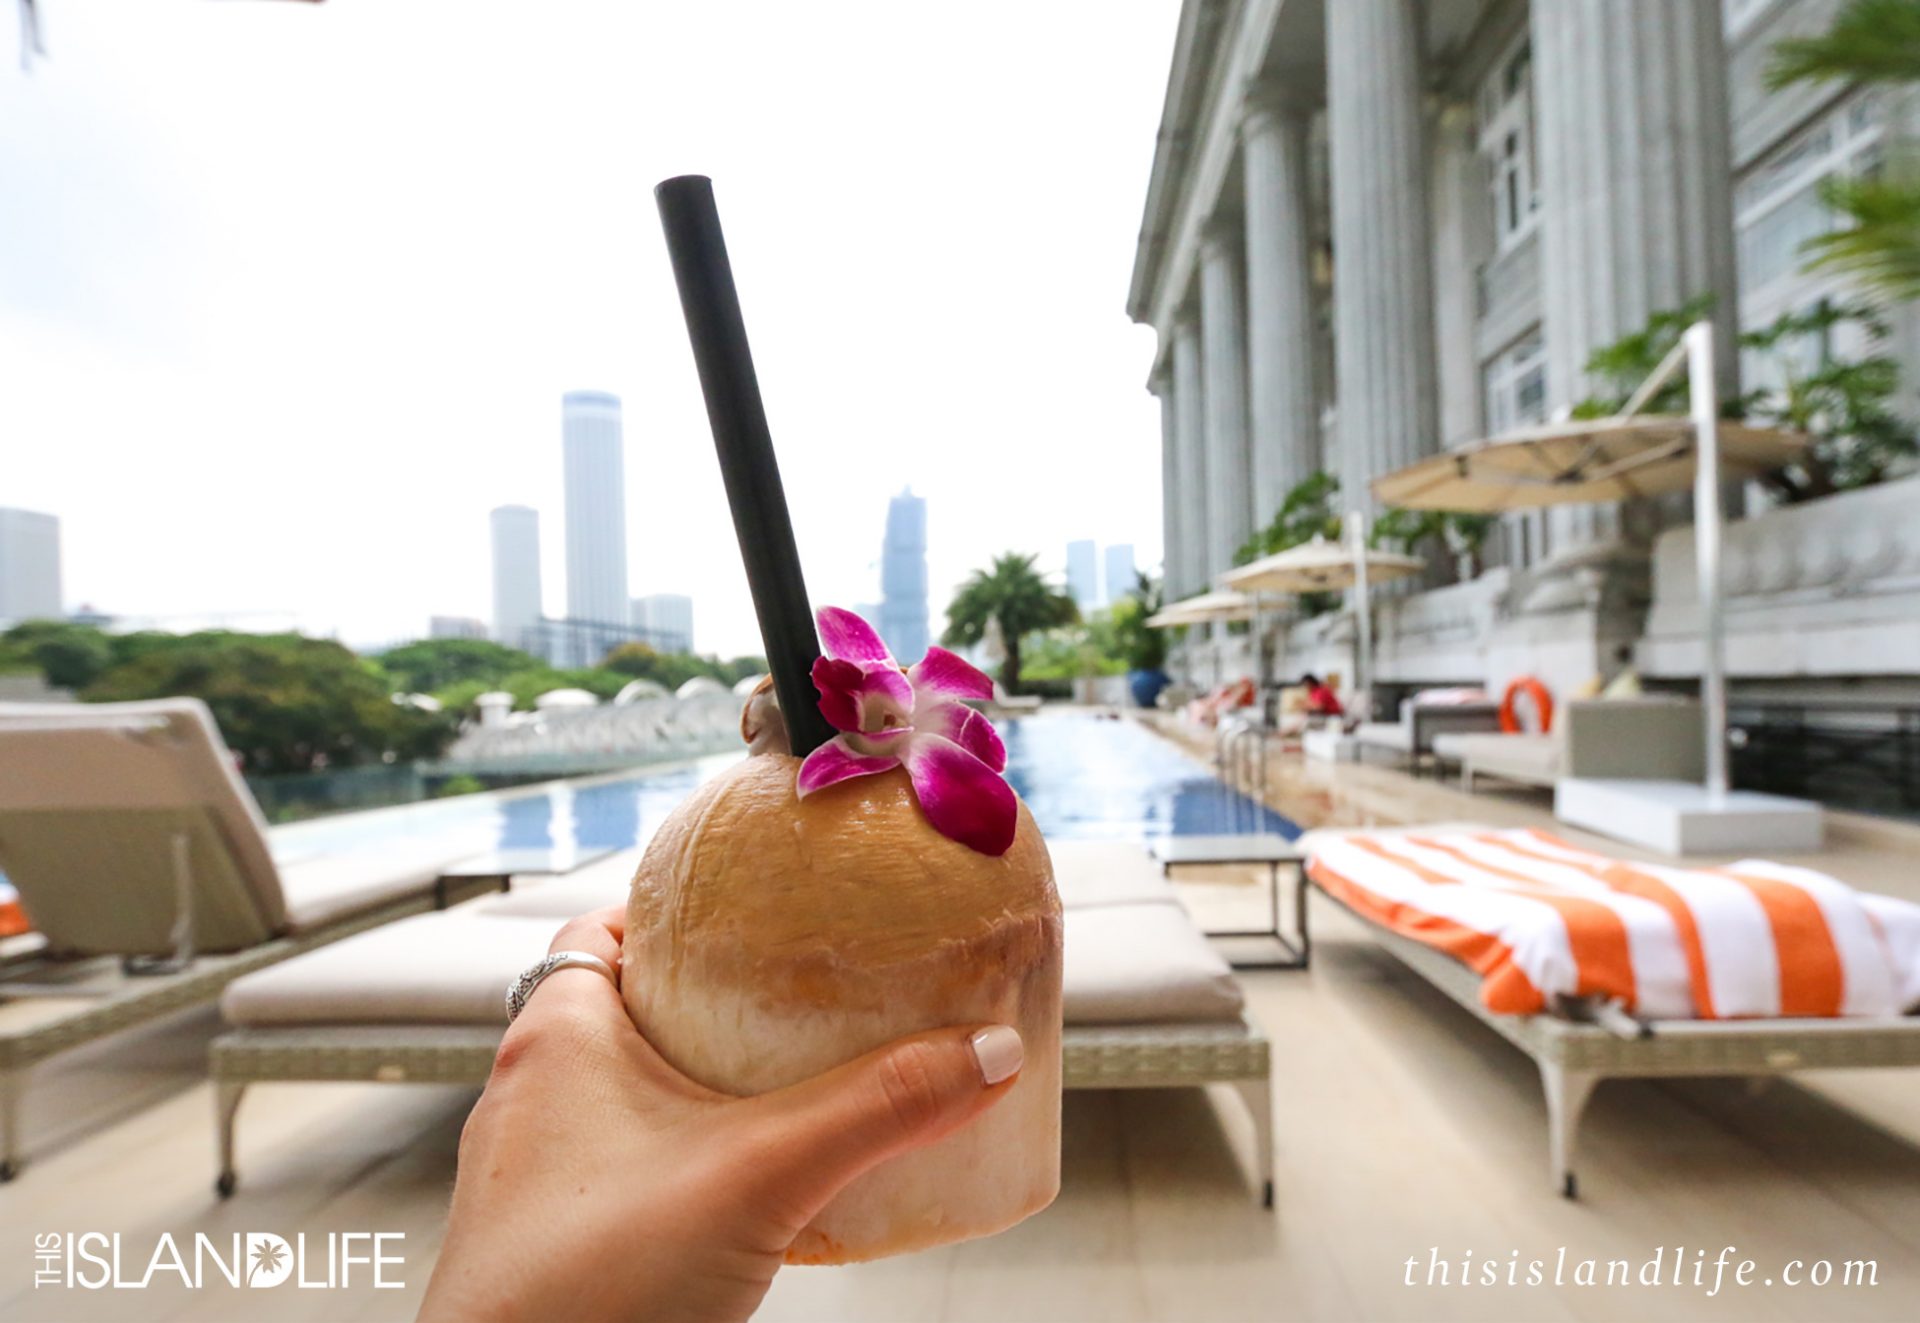 THIS ISLAND LIFE | The Fullerton Hotel, Singapore